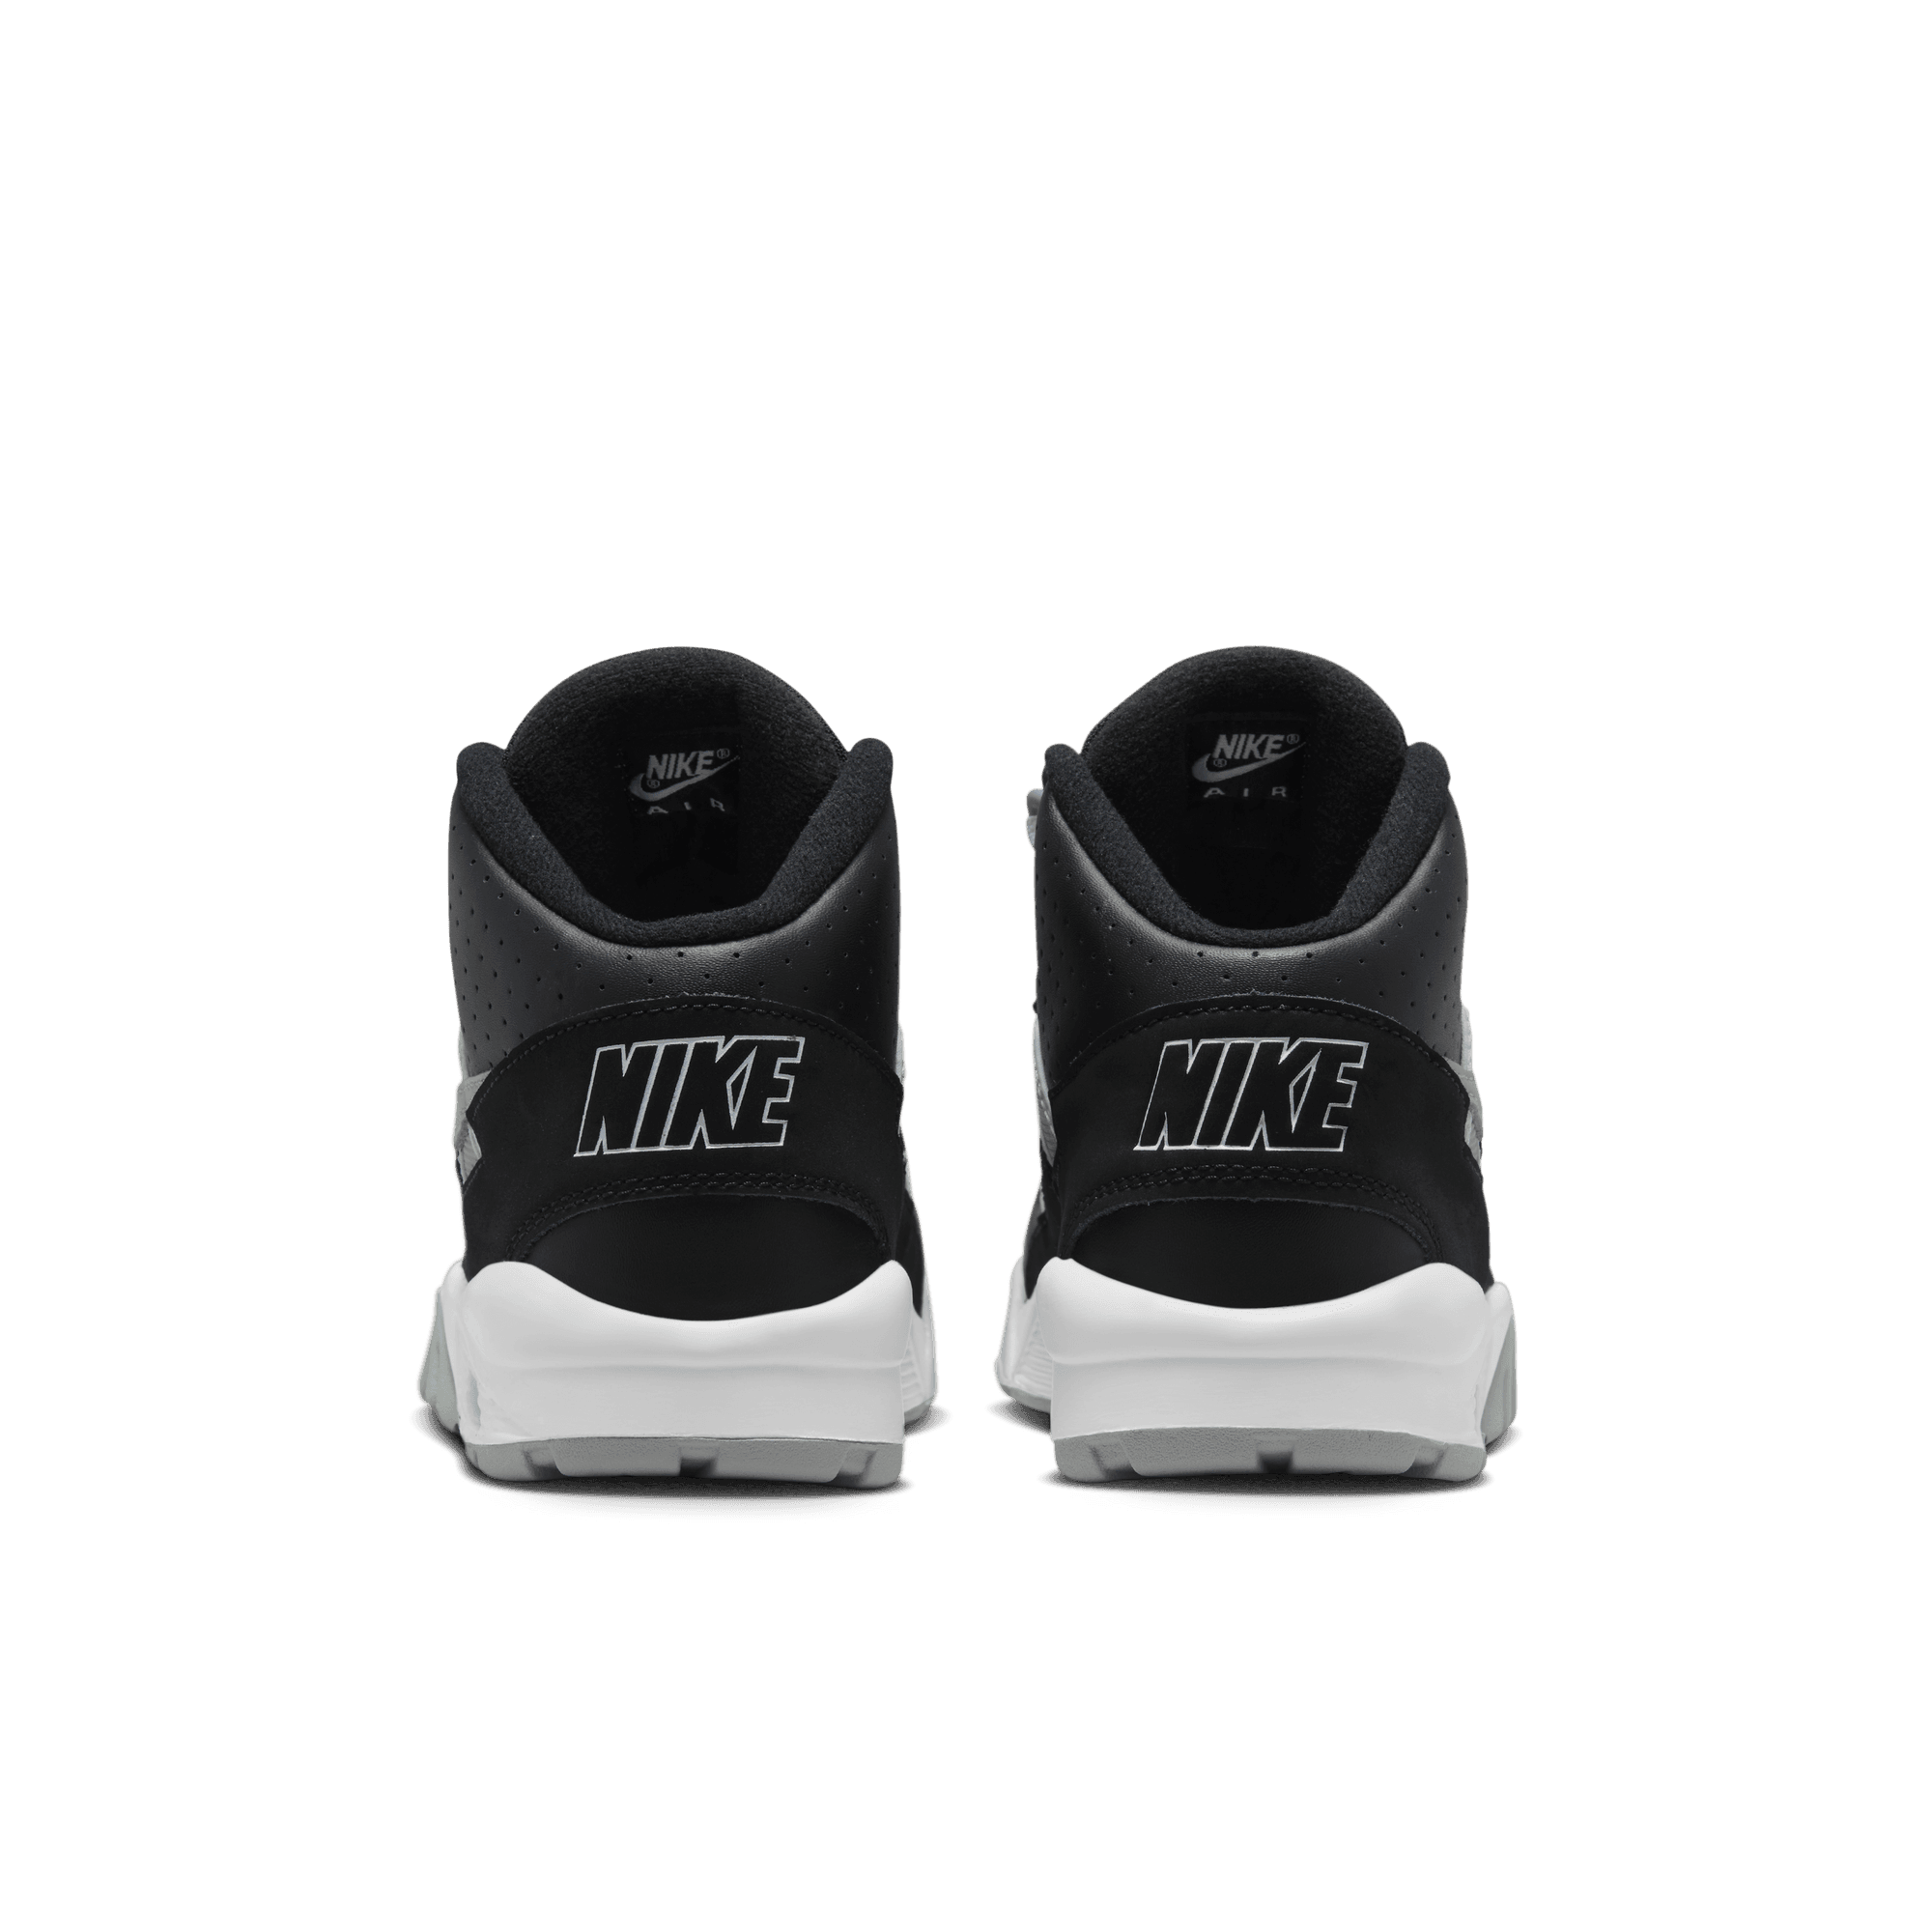 Nike Brings Black and White for Bo Jackson Retros